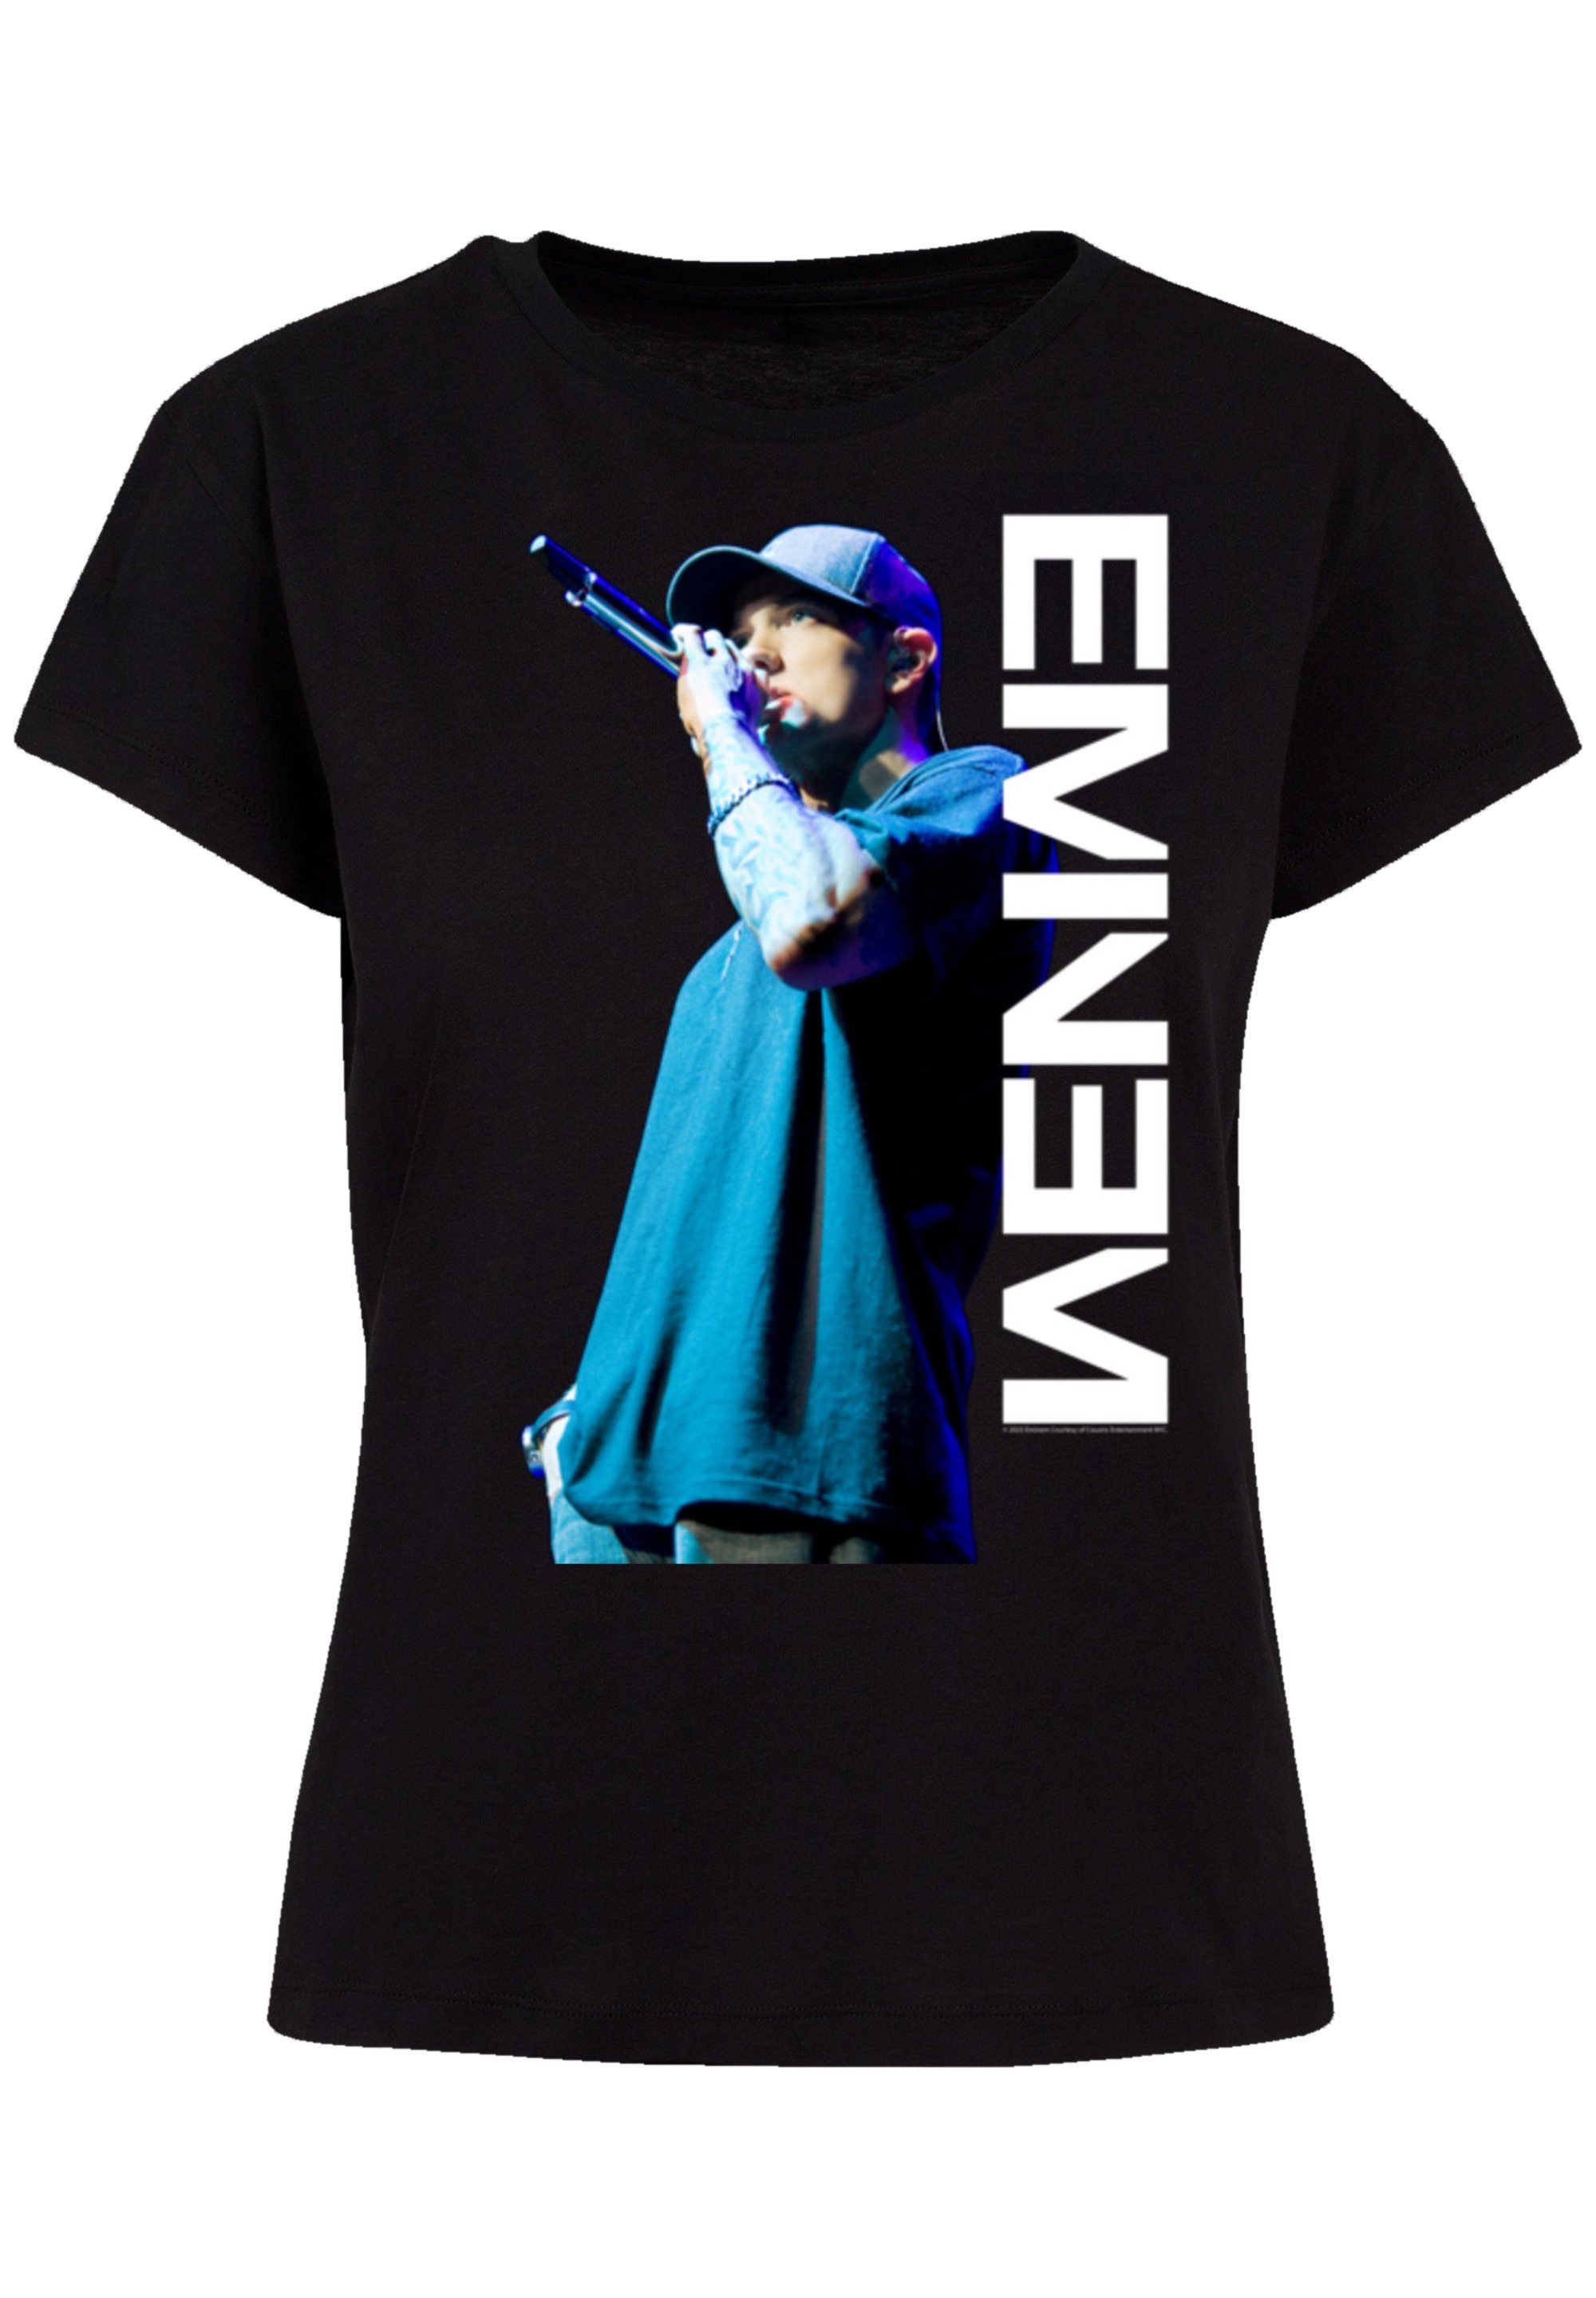 F4NT4STIC T-Shirt Eminem Mic Pose Musik Qualität, Premium Hip Hop Music Rap